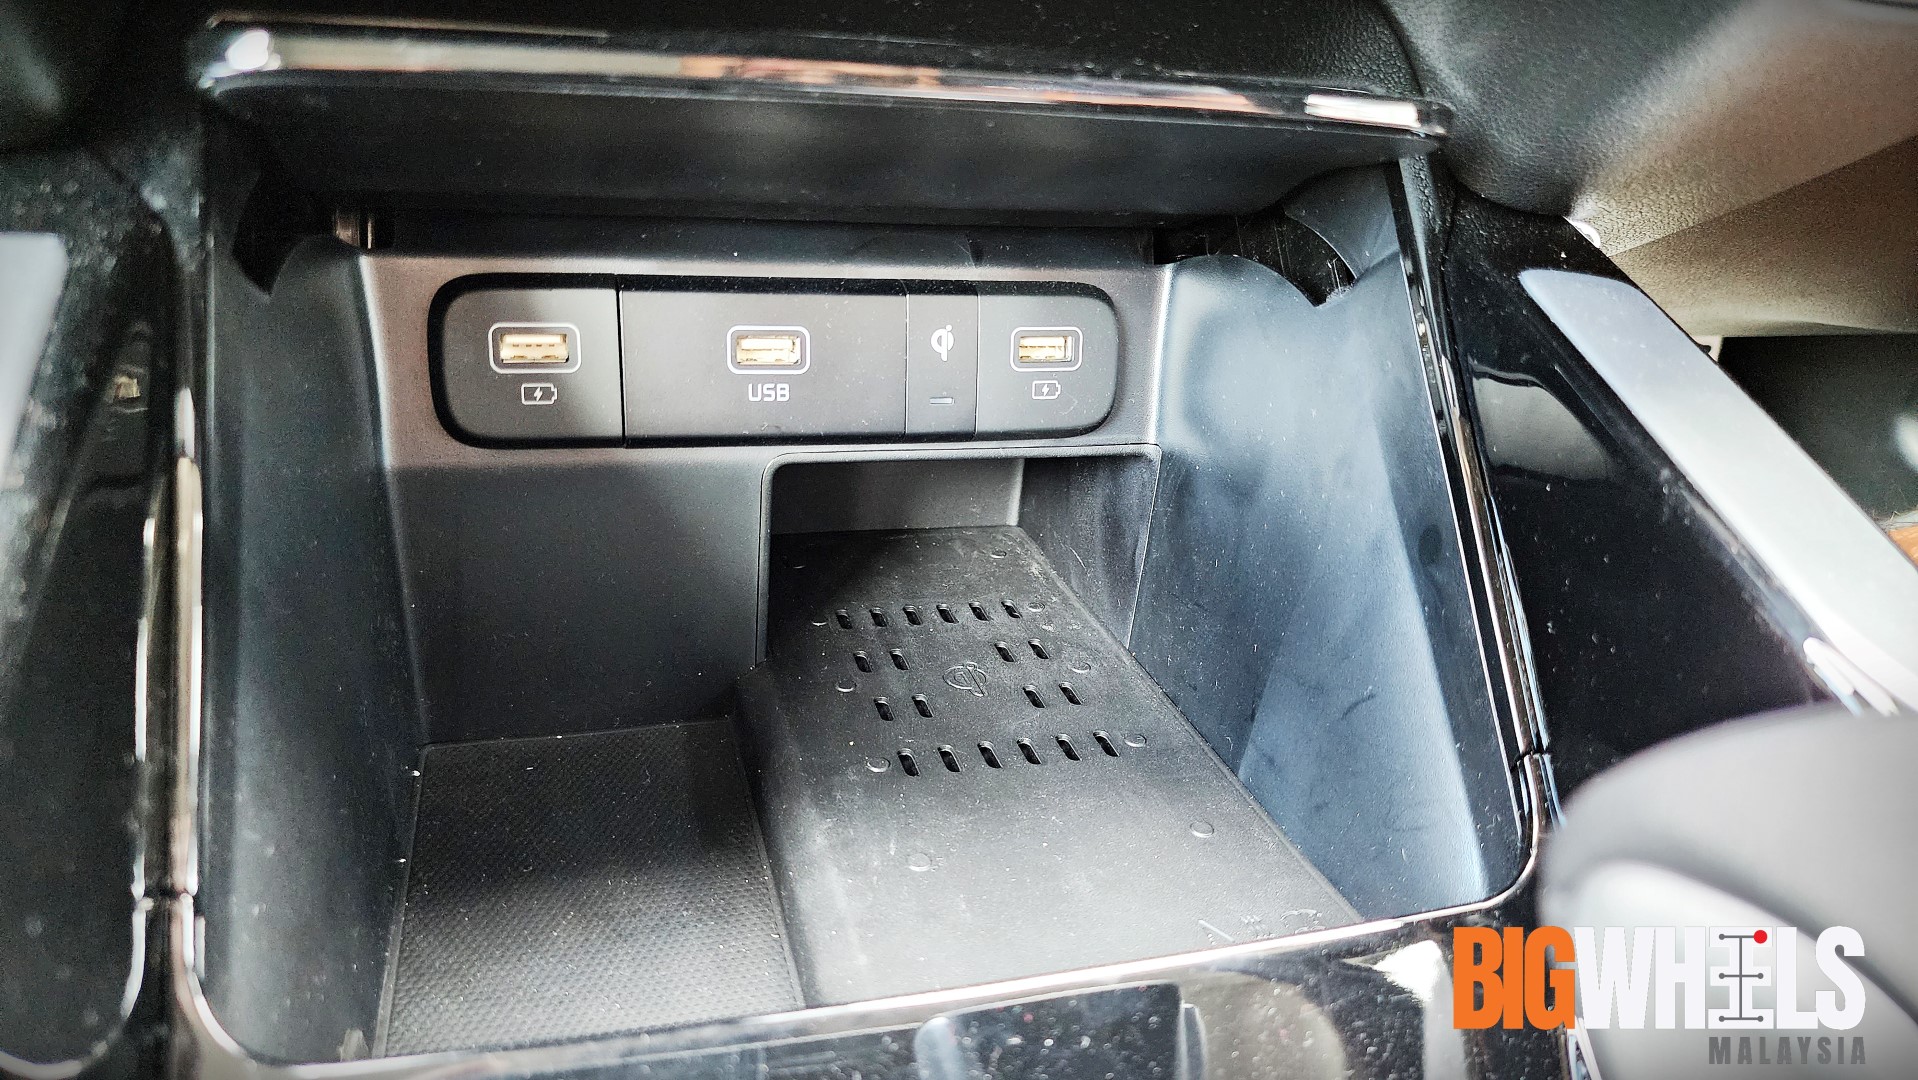 Kia Sorento 2.5G 2WD 7-Seater Review: Big Beautiful